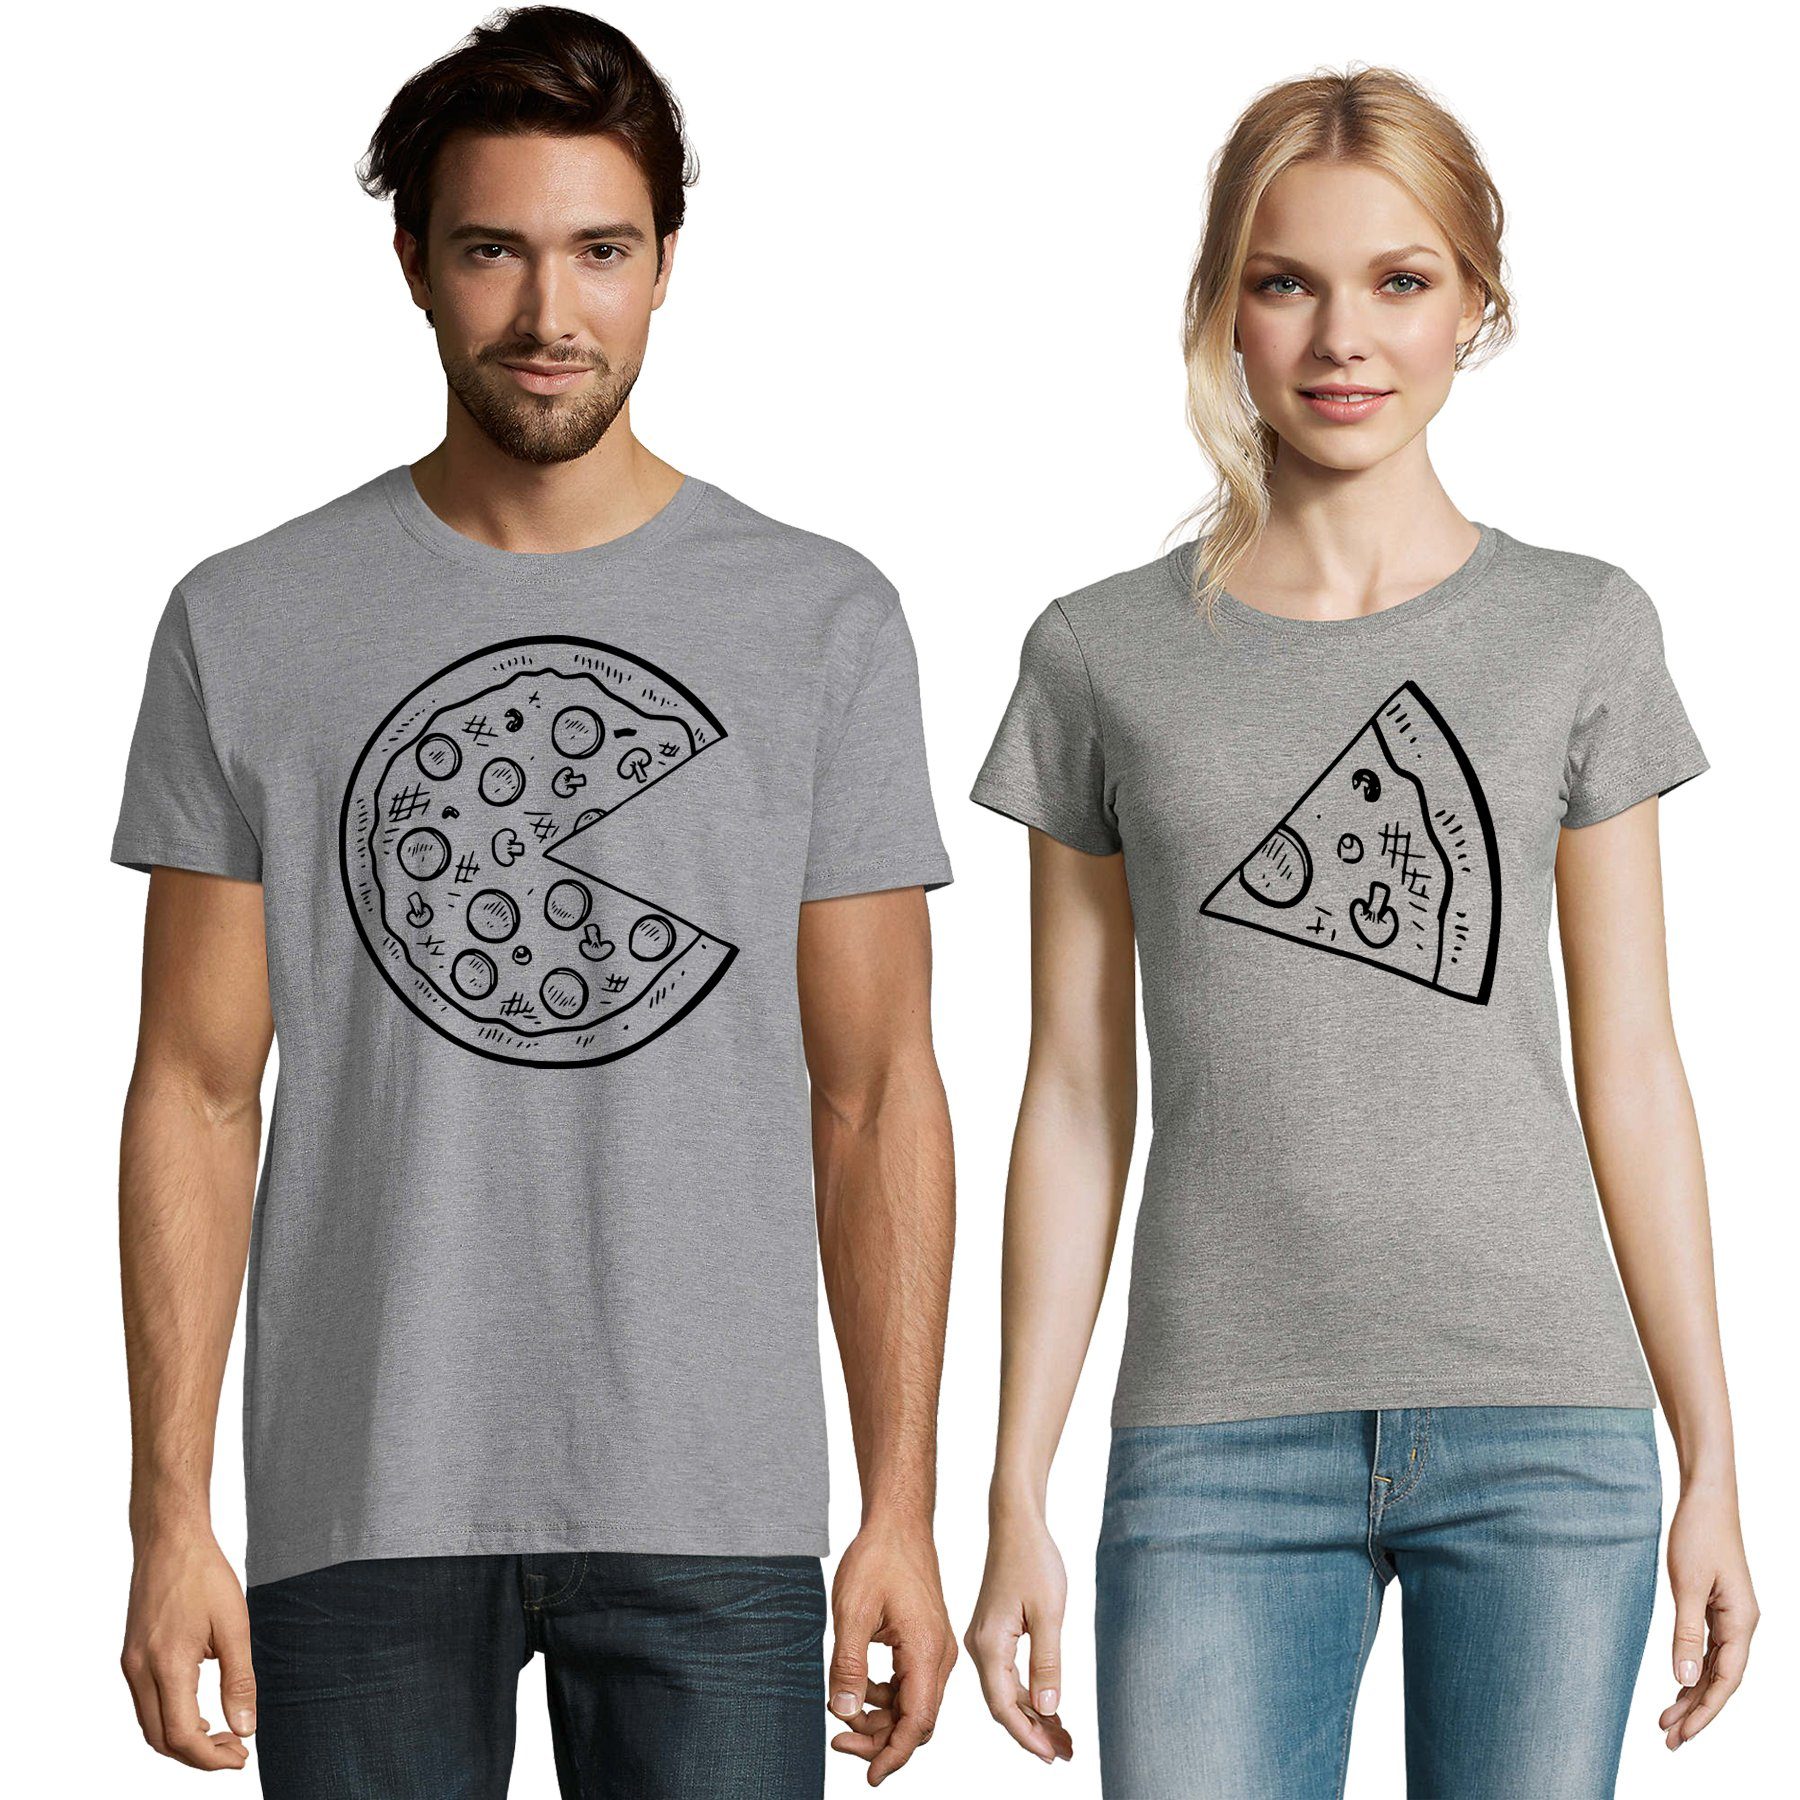 Pizza Friends Blondie Stück Pärchen Partner T-Shirt Grau & Valentin Damen Brownie Shirt BFF